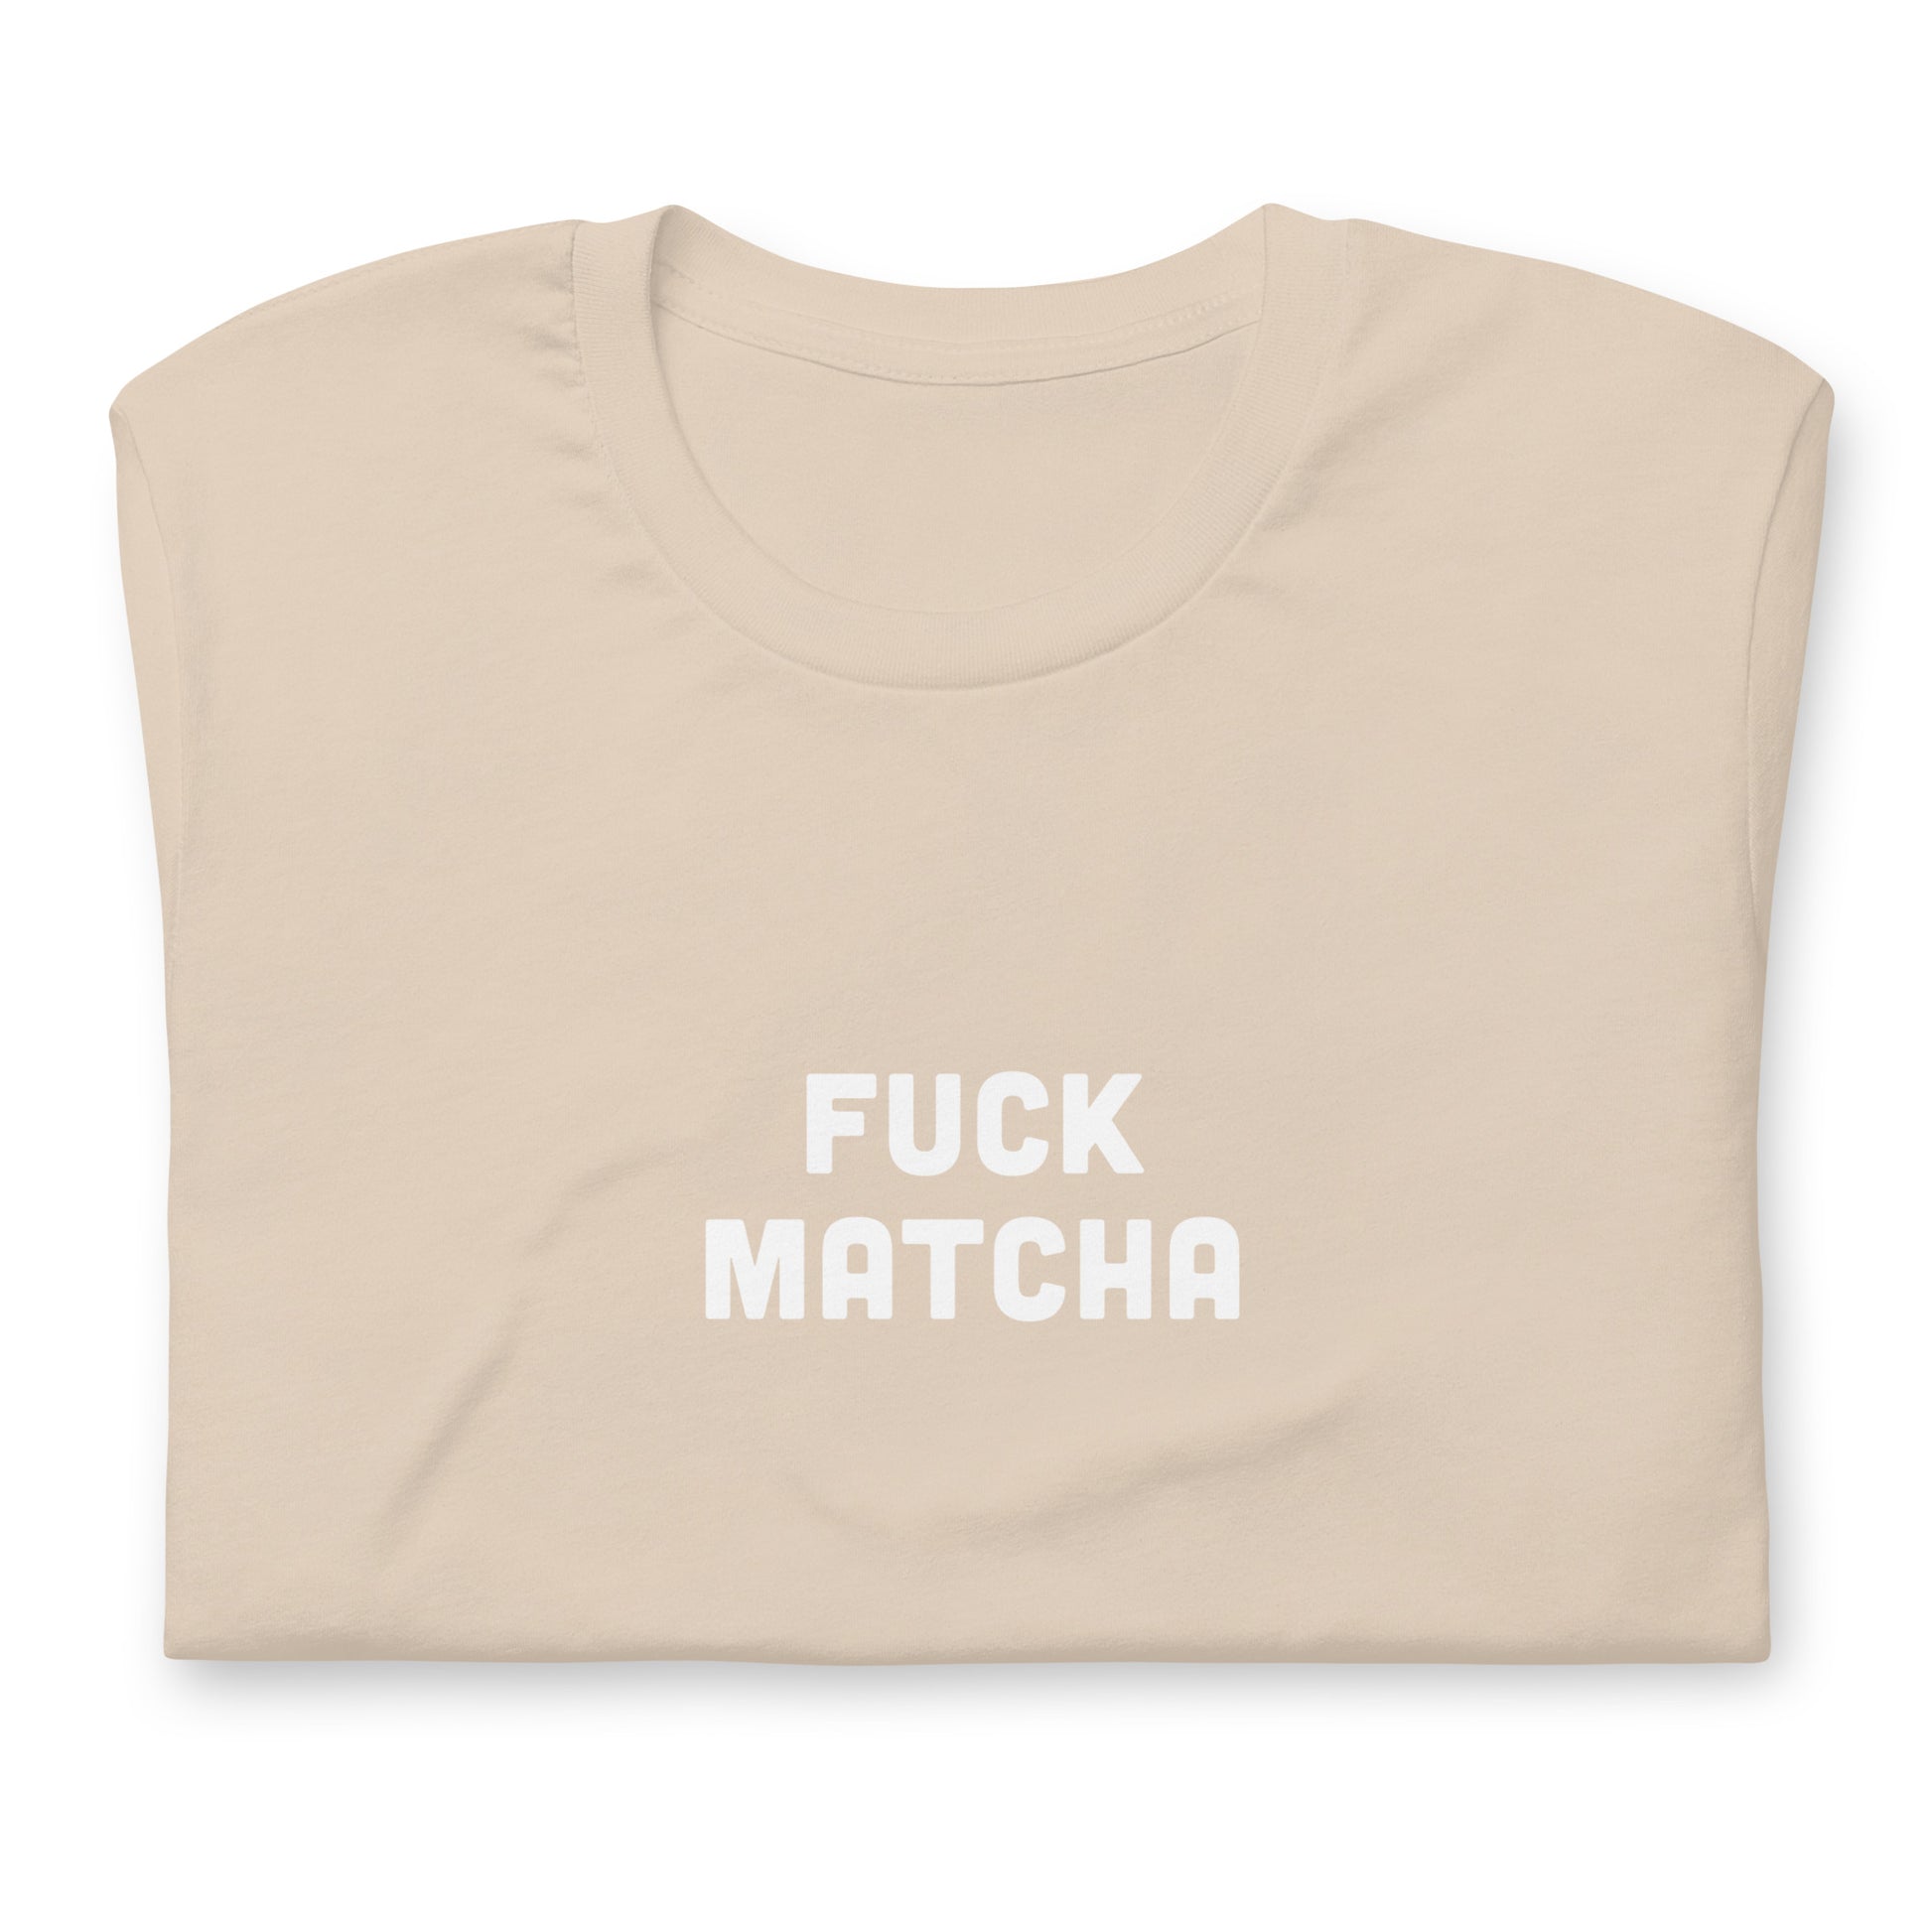 Fuck Matcha T-Shirt Size L Color Asphalt